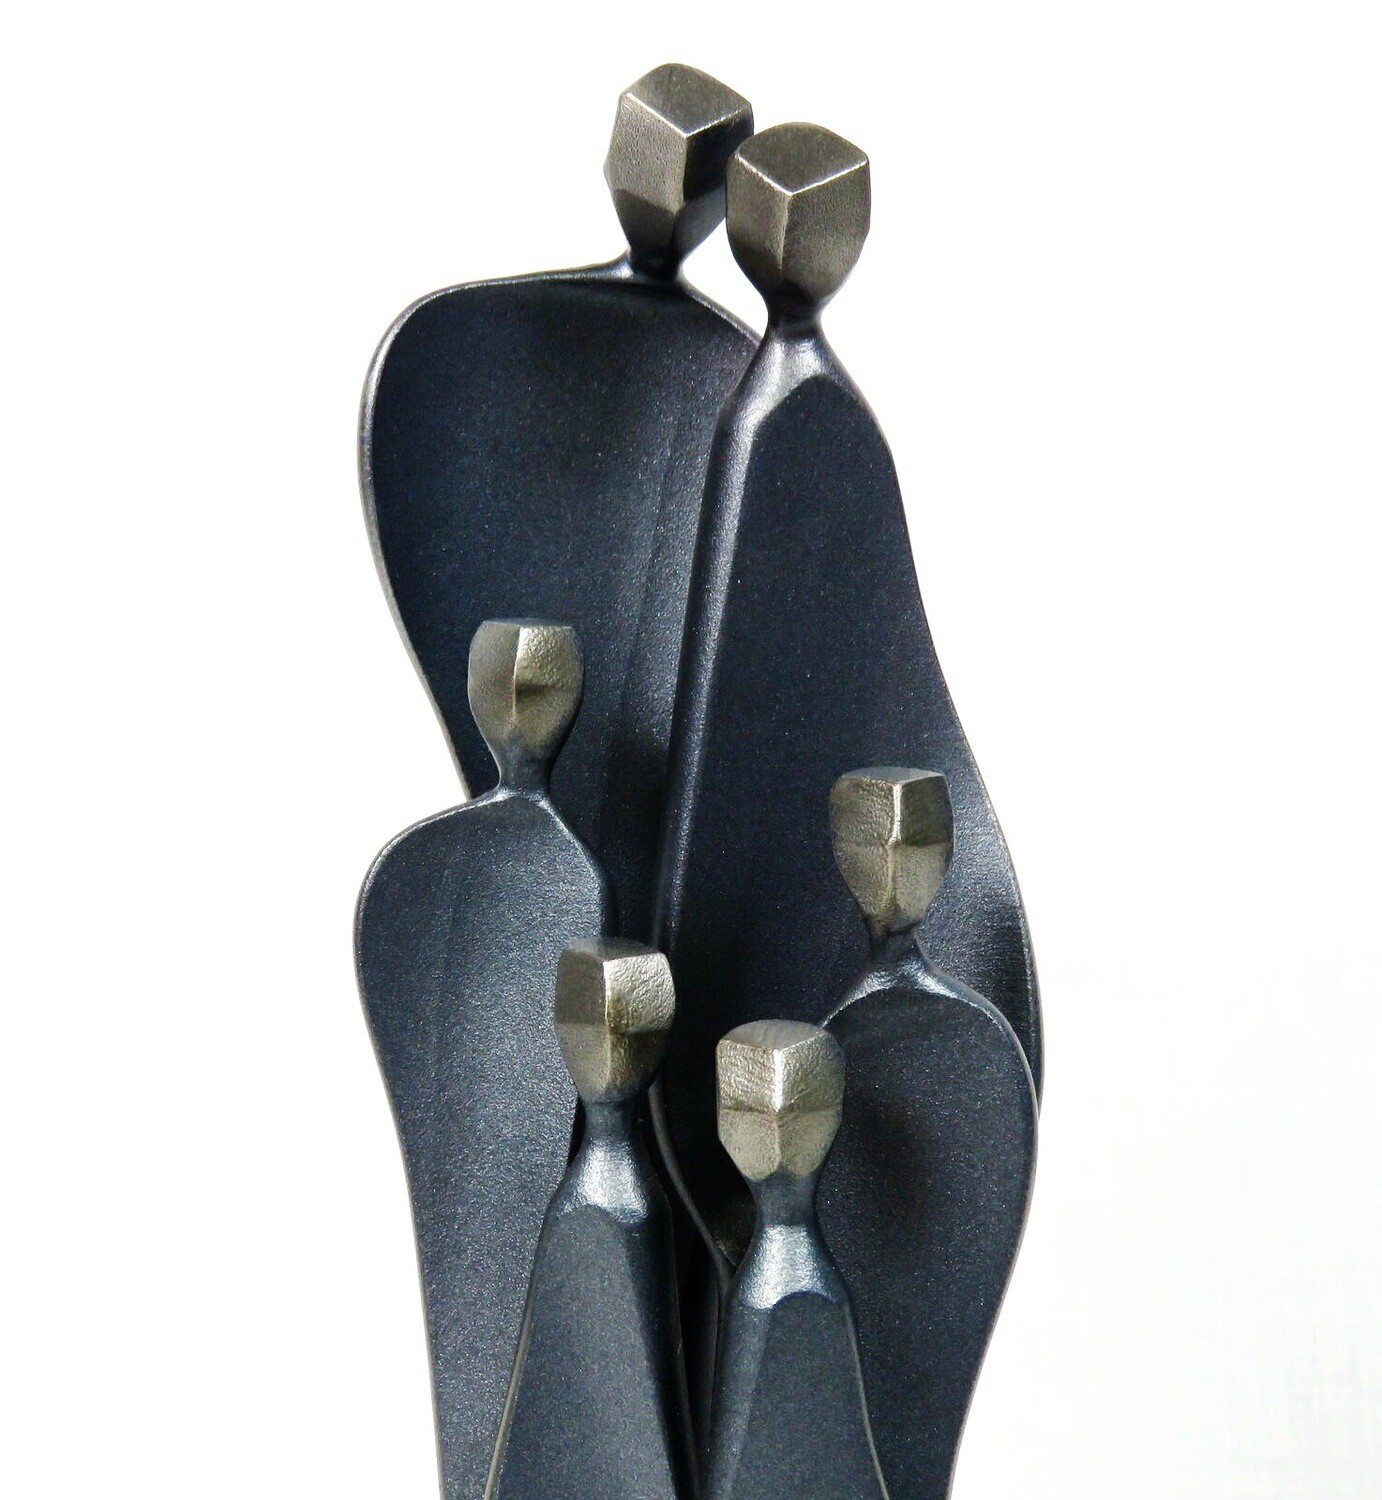 Boris Kramer Family of 6 Solid Steel 12 Inch Sculpture